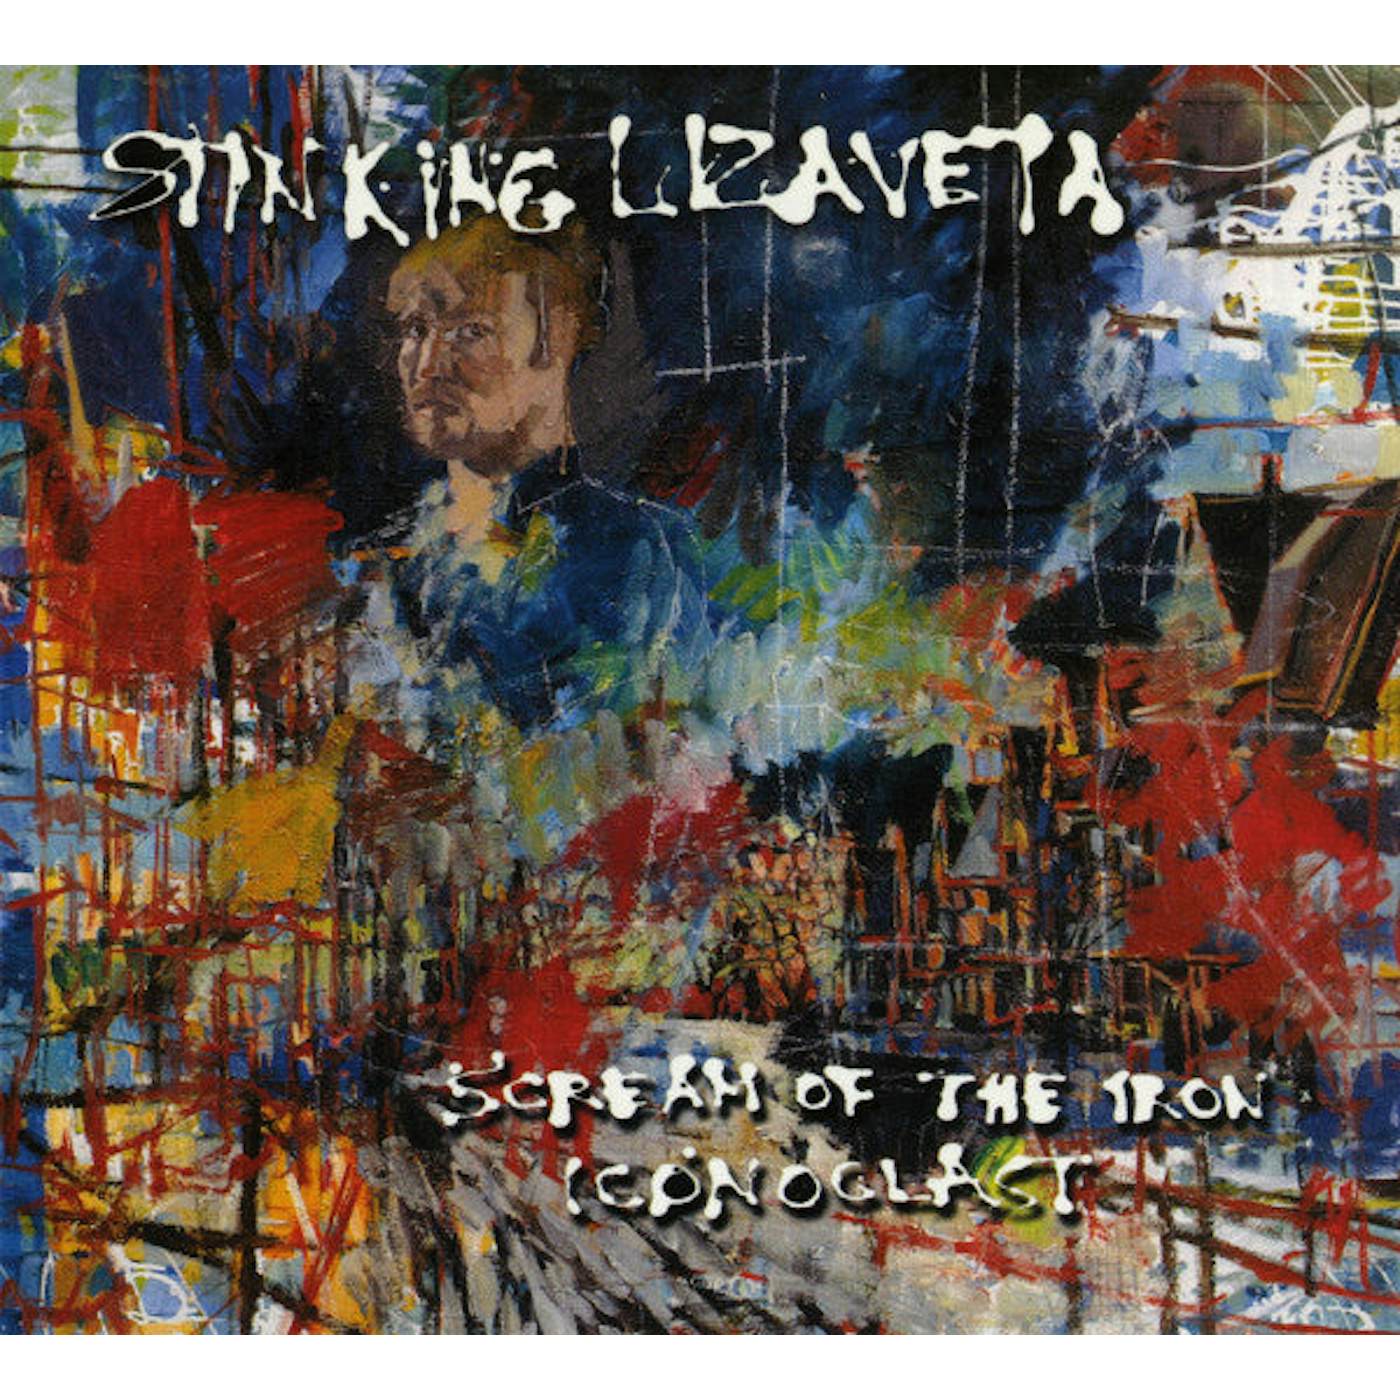 Stinking Lizaveta ‎– Scream Of The Iron Iconoclast CD